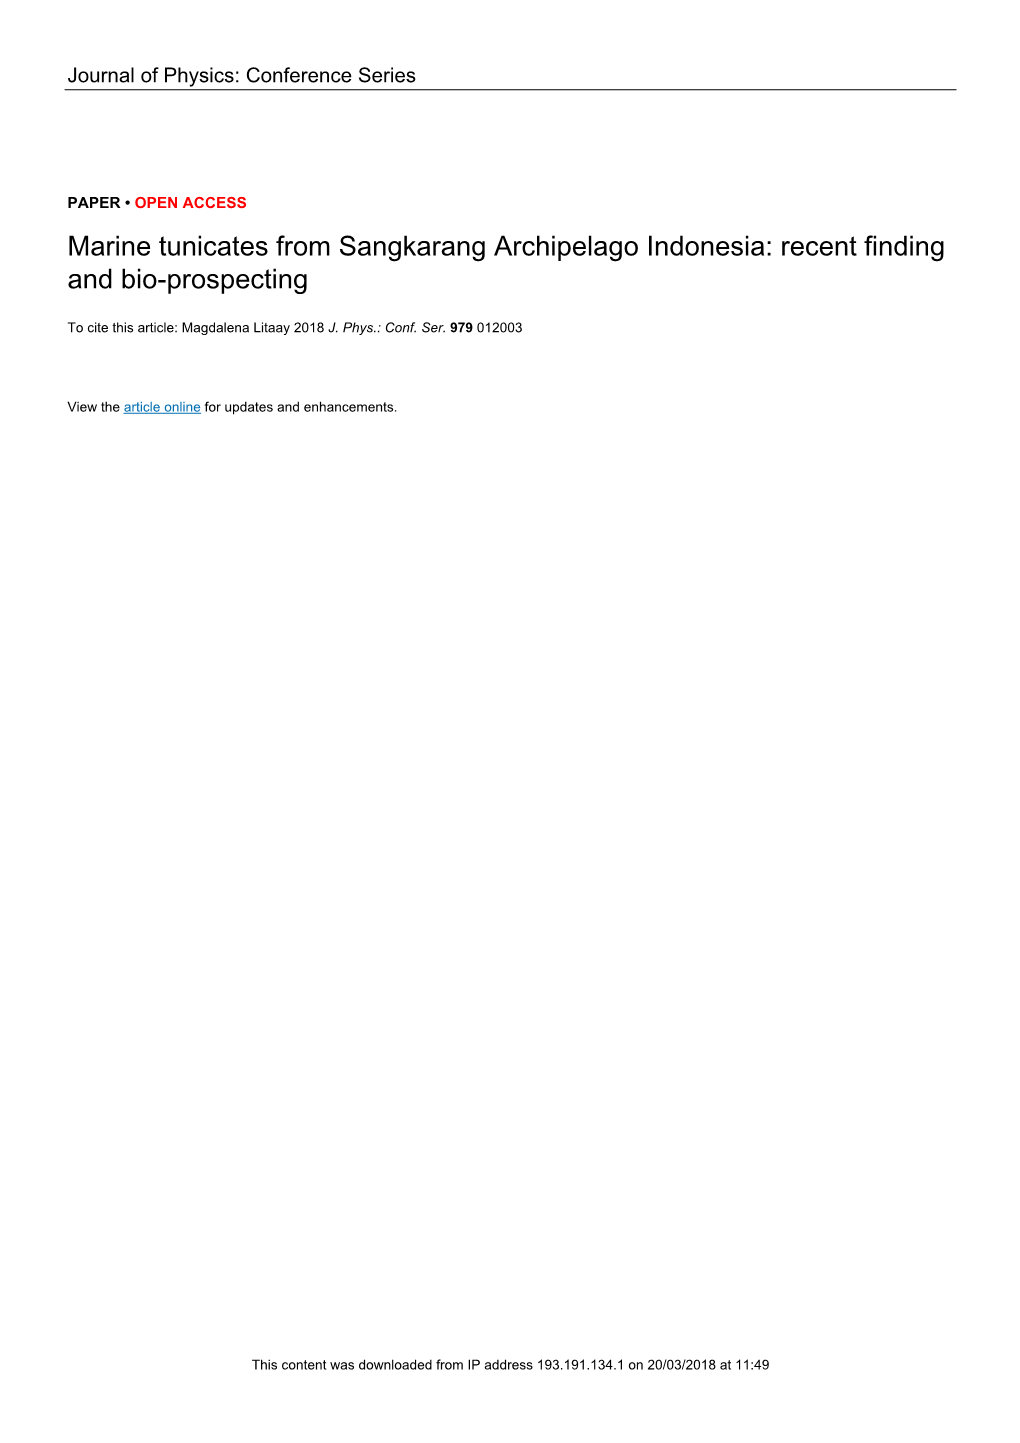 Marine Tunicates from Sangkarang Archipelago Indonesia: Recent Finding and Bio-Prospecting